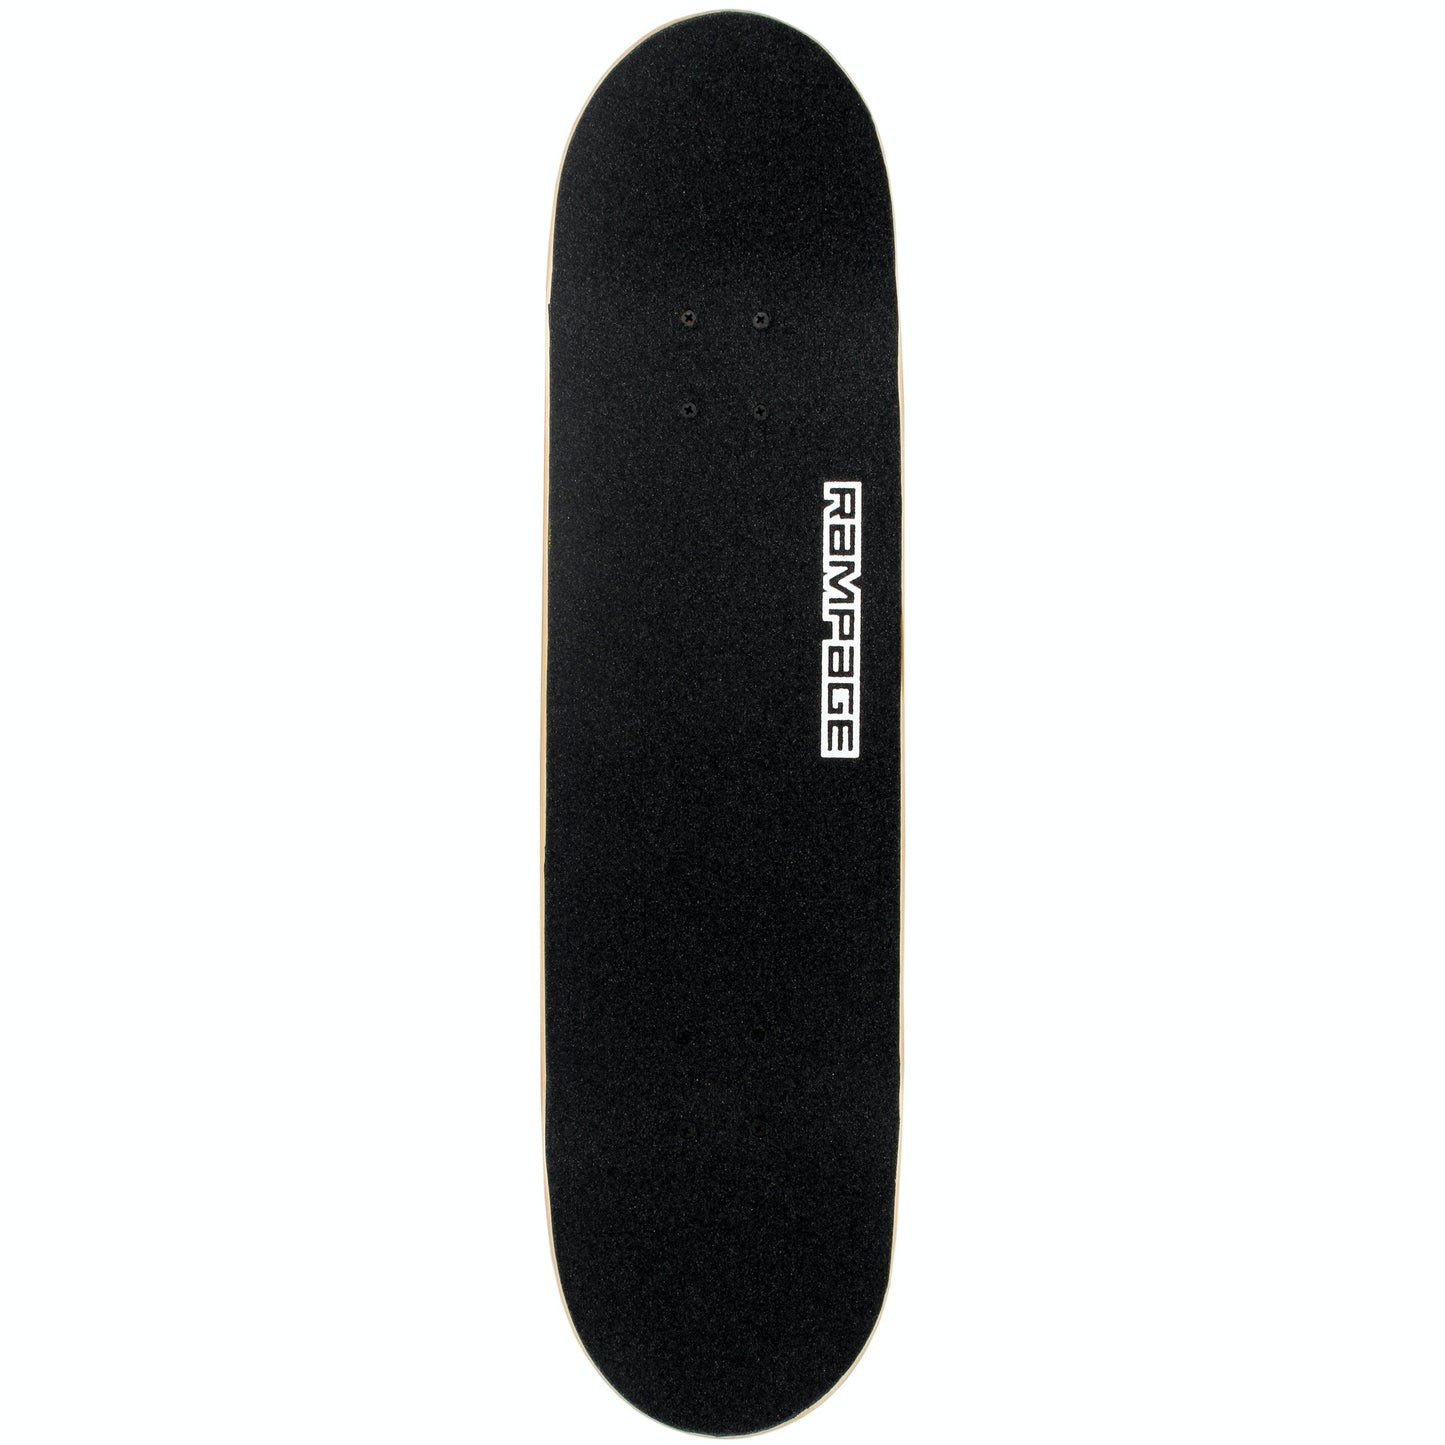 Rampage Glitch Flicker Complete Skateboard - Multi 8''